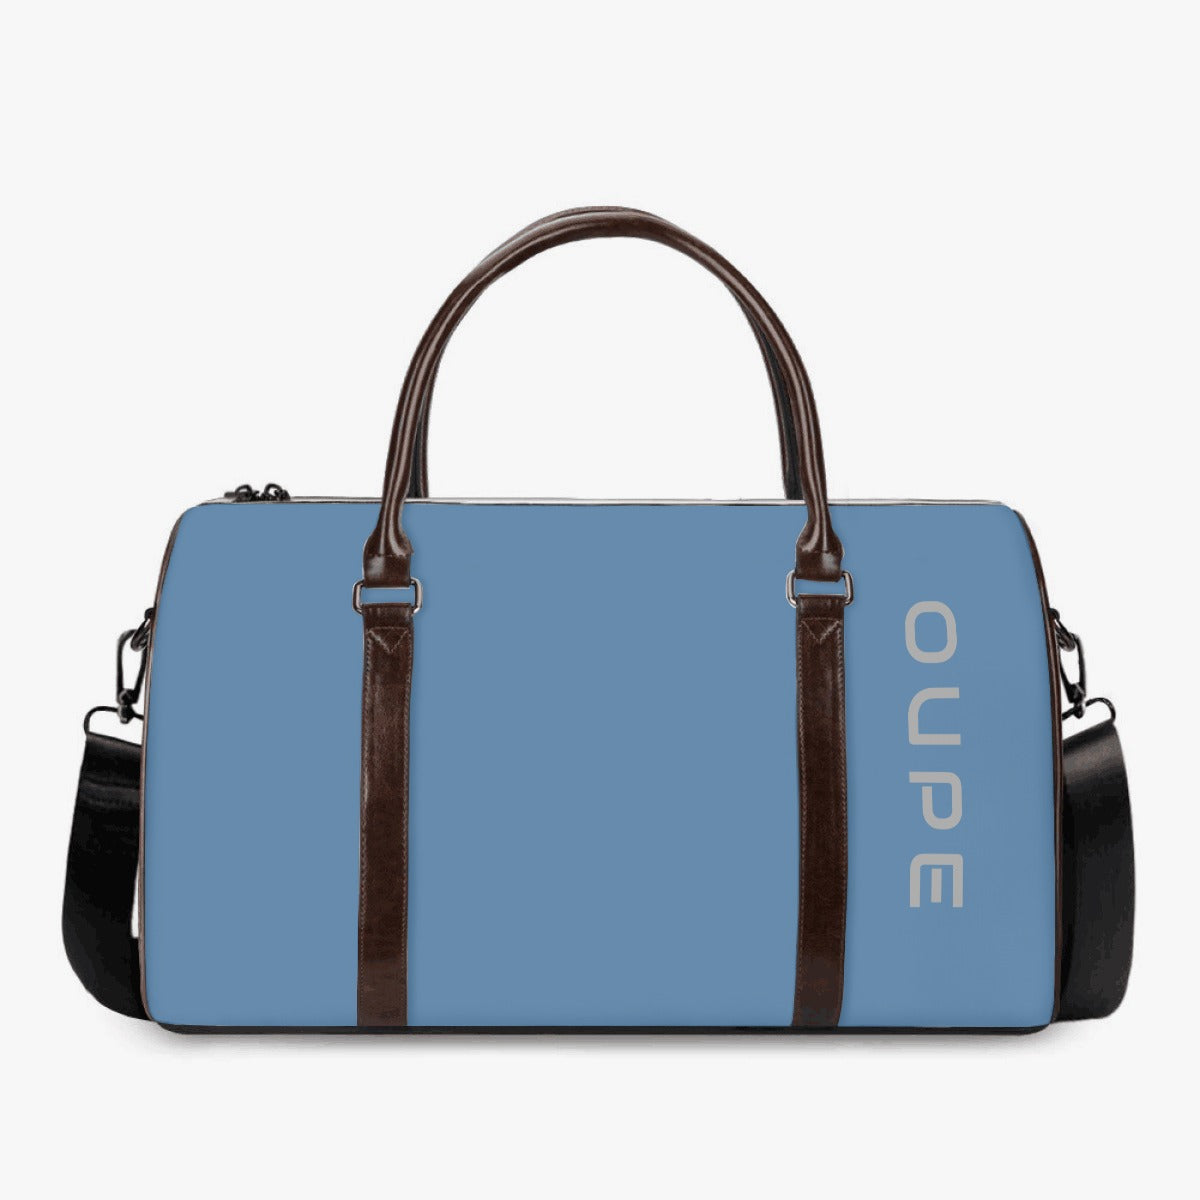 AC BAROQUE "OUPE" Designer Overnight Duffle Bag (Baby blue)